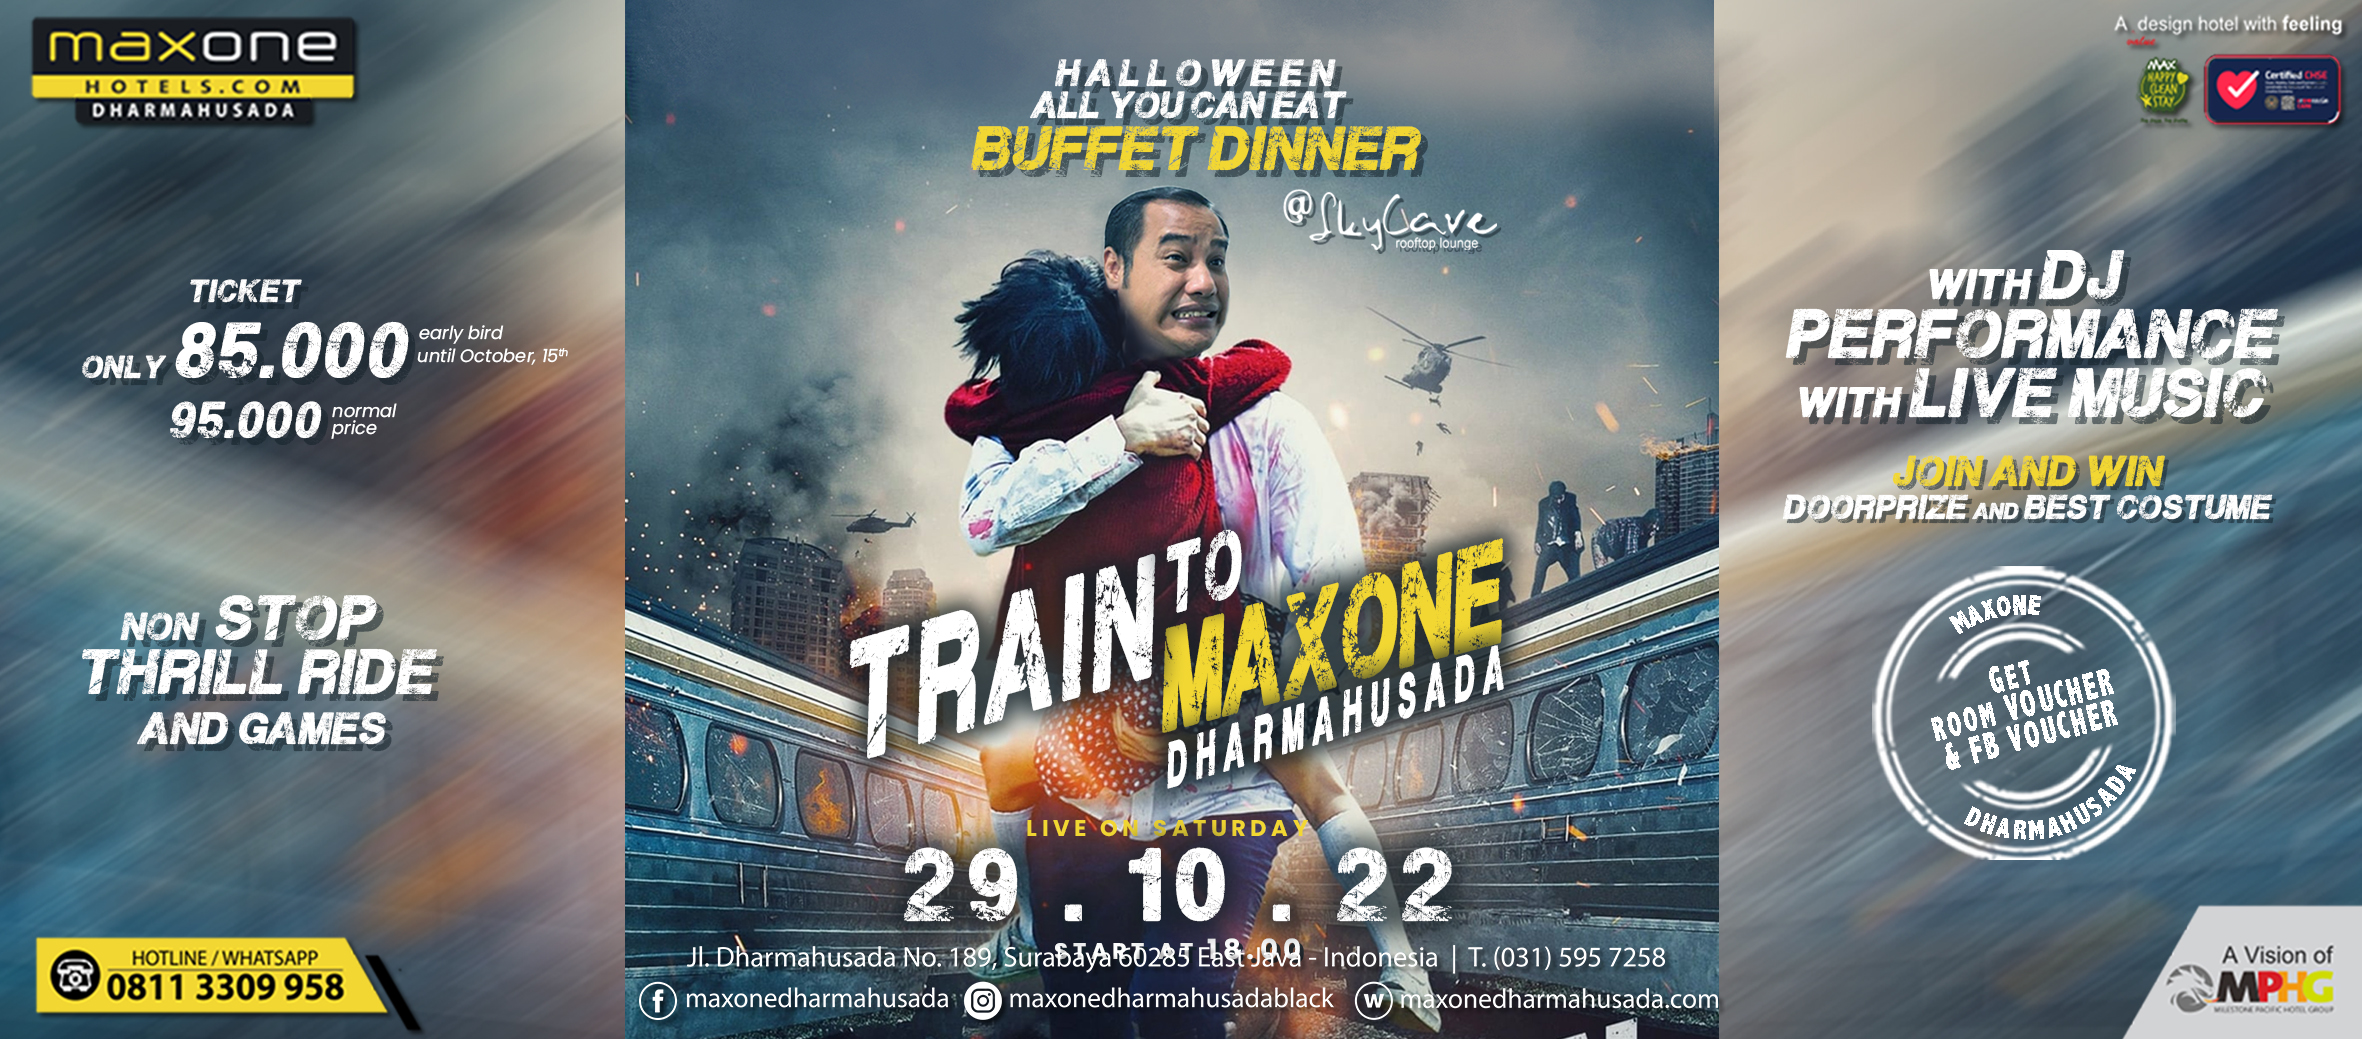 train to maxone